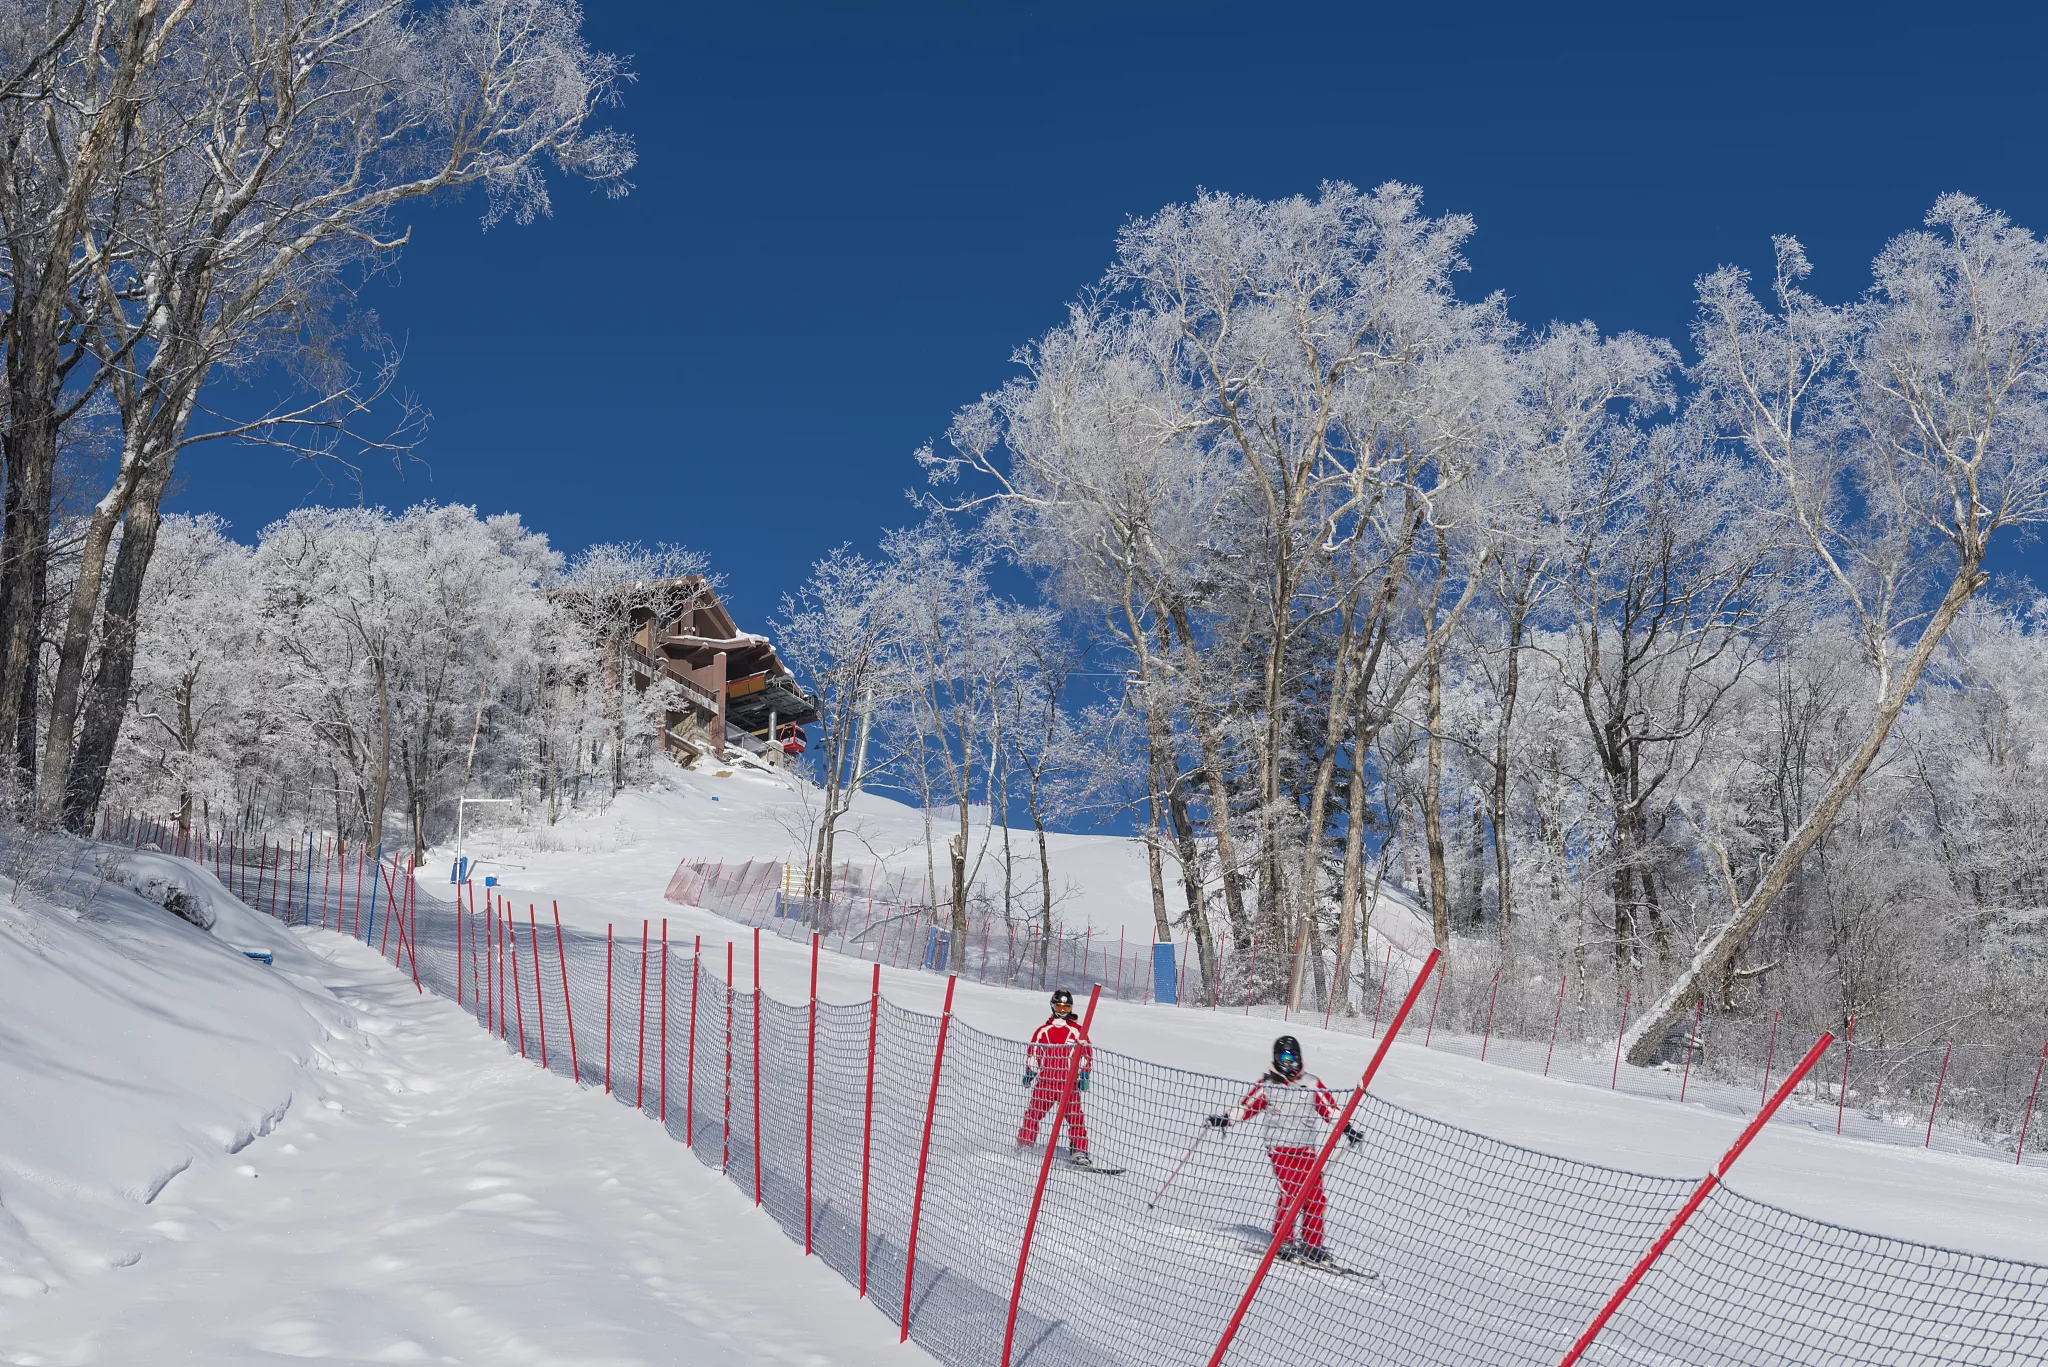 Changbaishan Ski Resort in China, East Asia | Snowboarding,Skiing - Rated 3.3